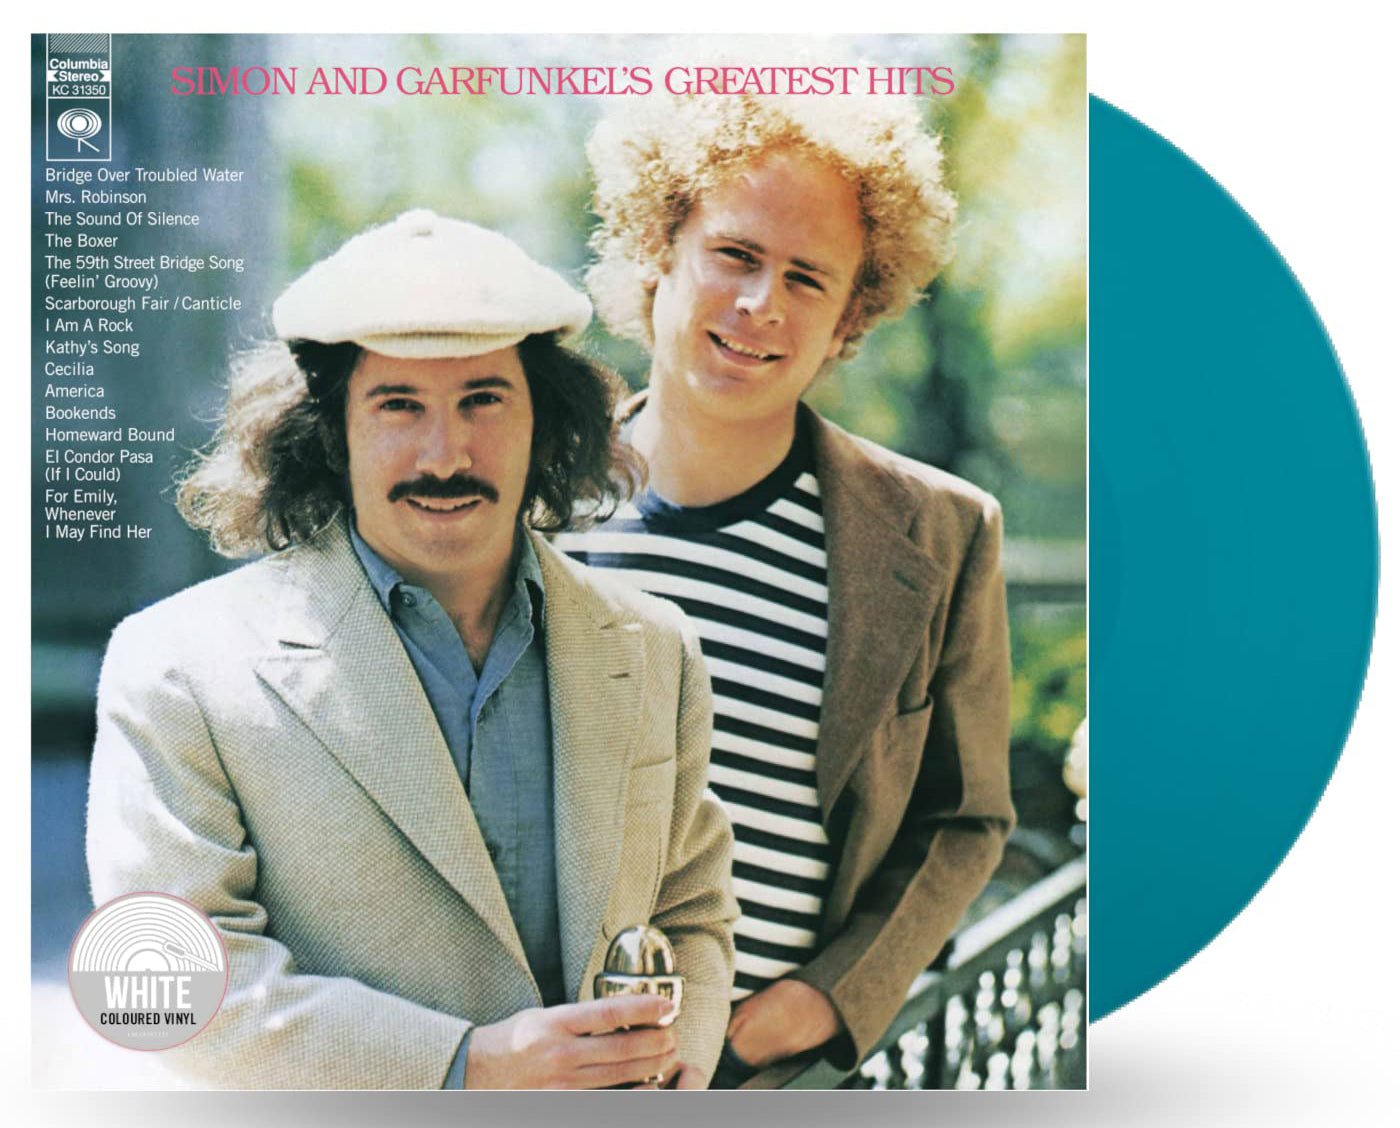 Simon & Garfunkel Greatest Hits Limited Turquoise Vinyl LP